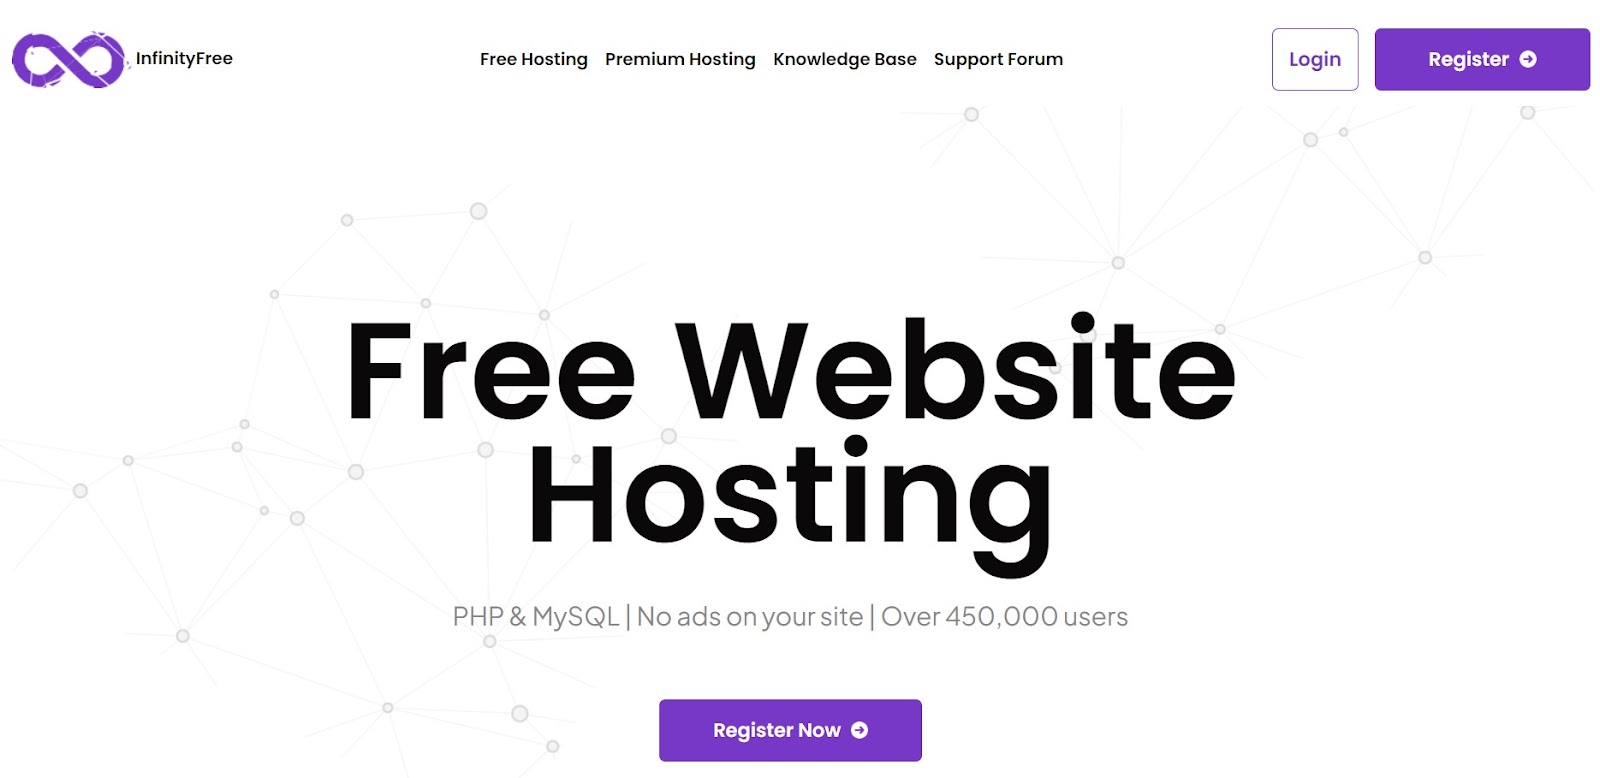 InfinityFree free web hosting landing page